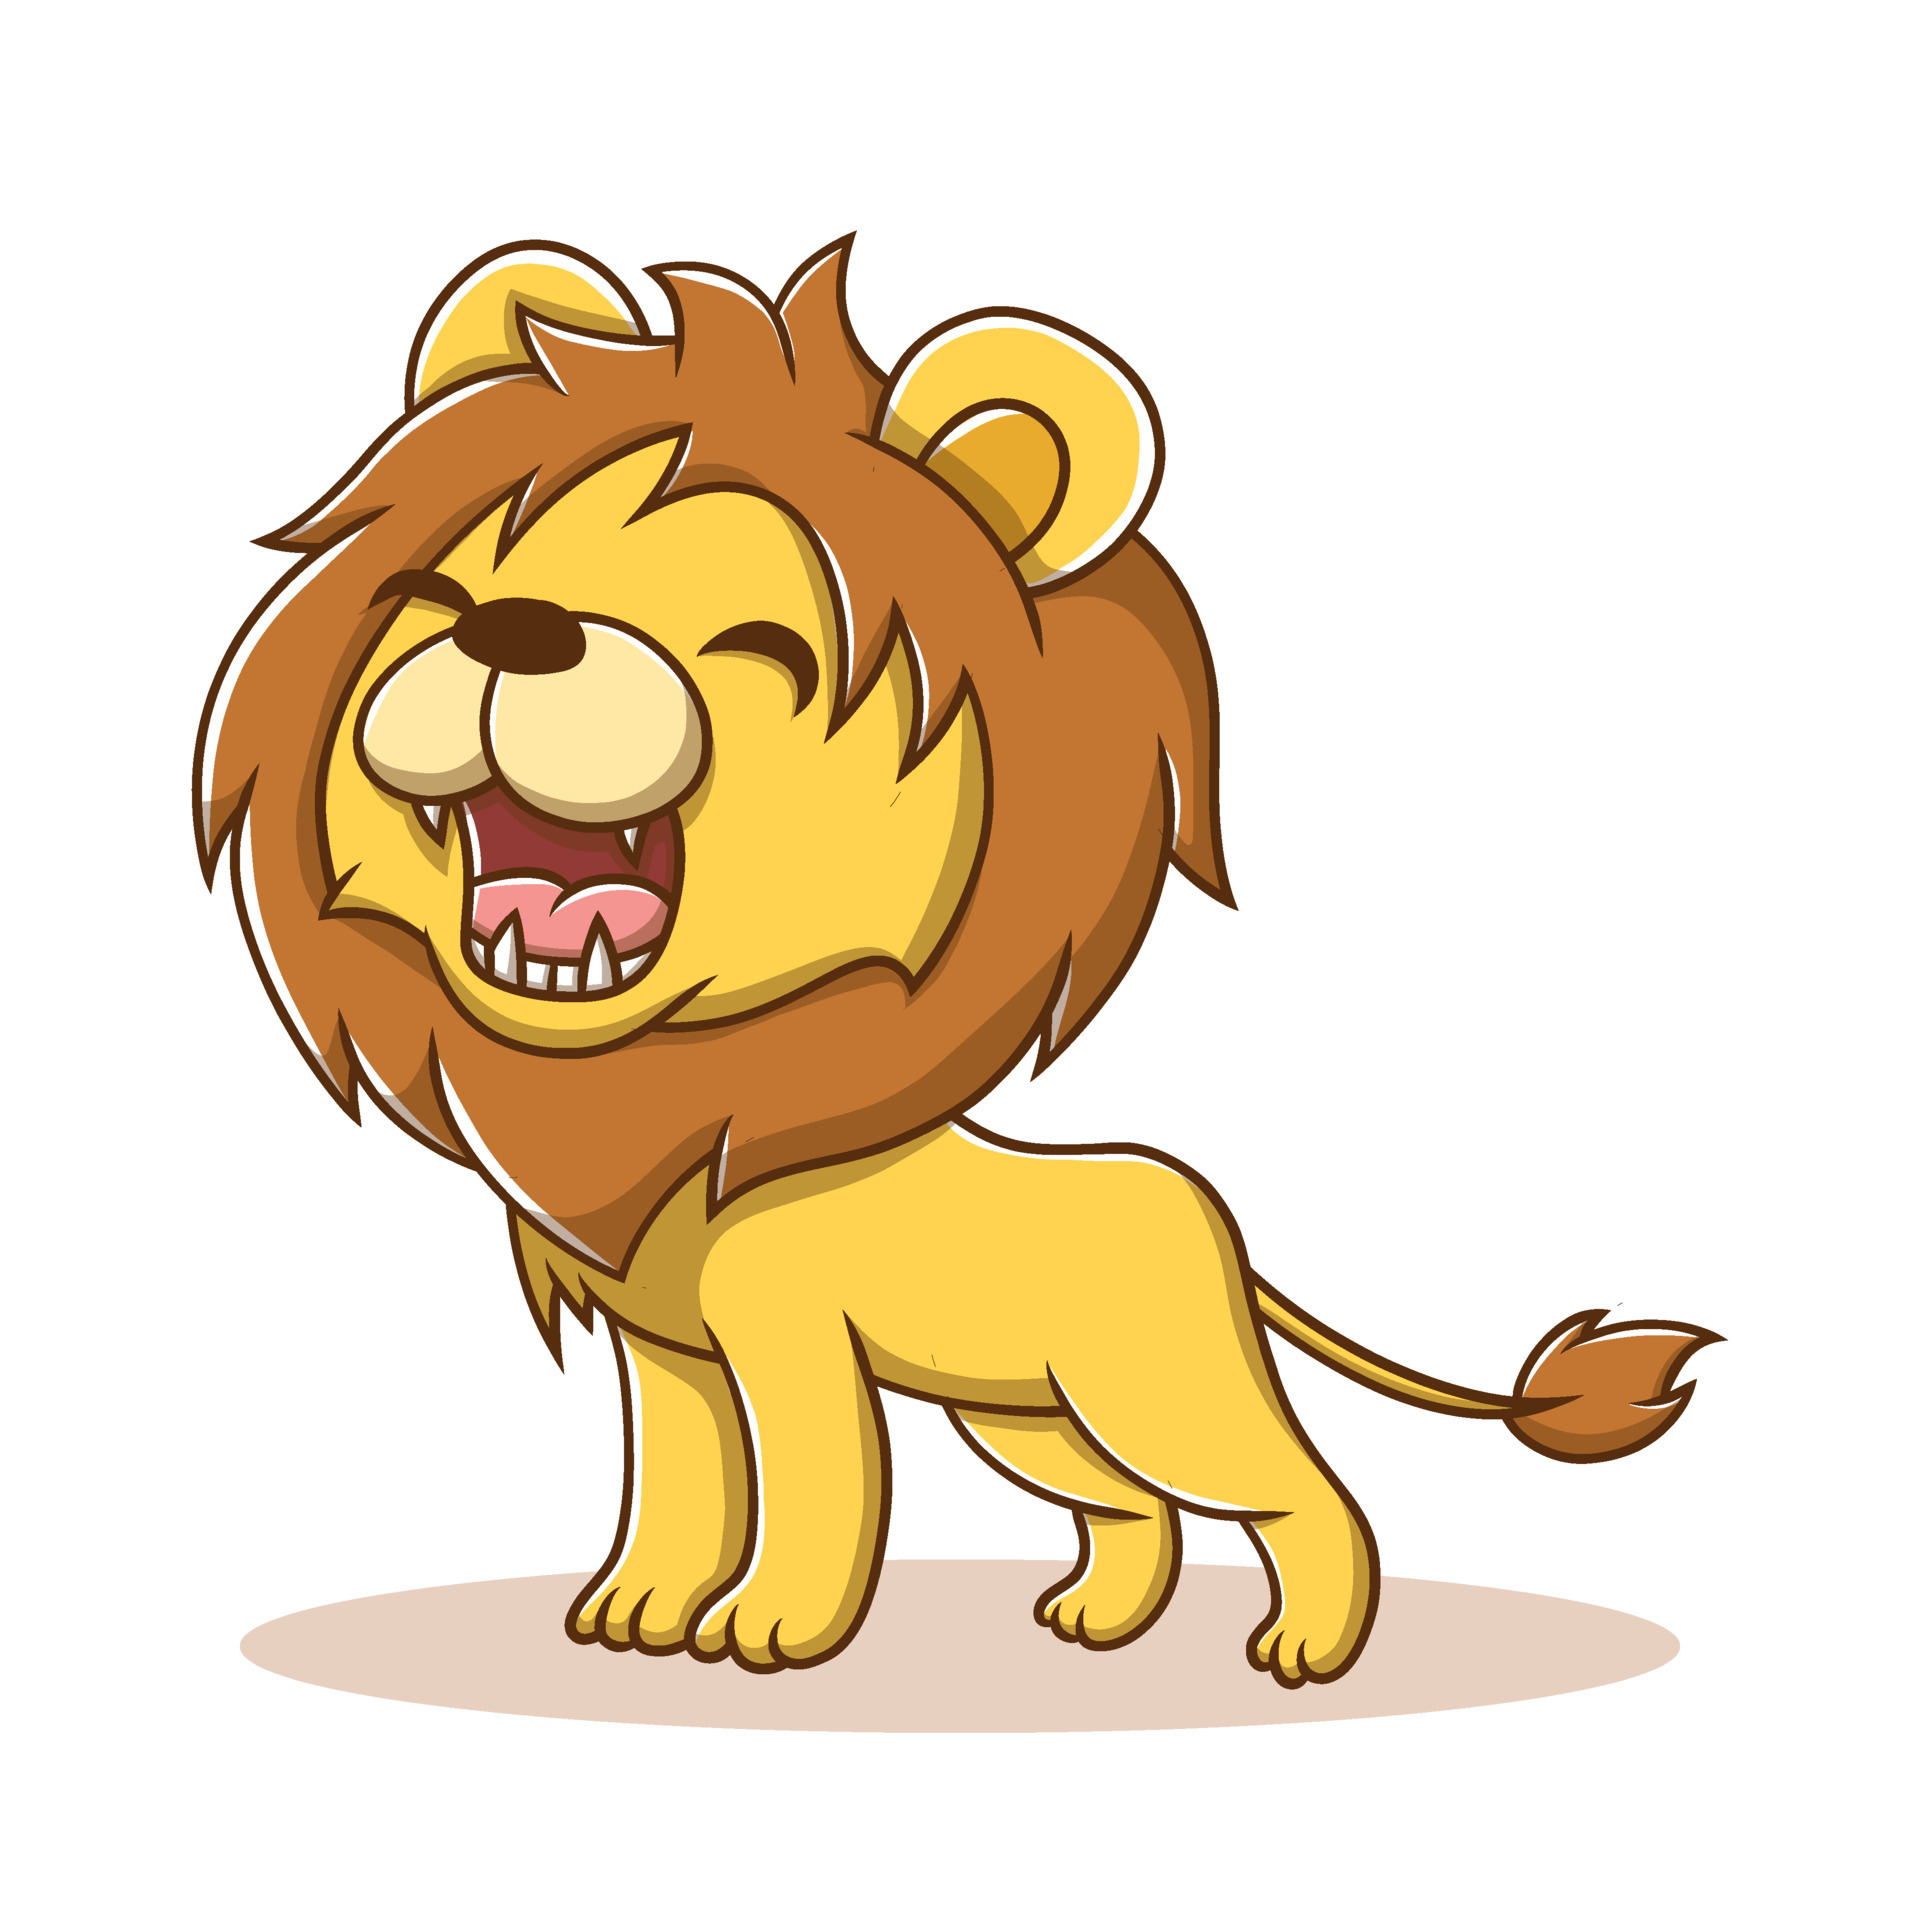 Baby Lion Kids Drawing Icon Cartoon. Lion King Mascot Vector Illustration  9221363 Vector Art at Vecteezy